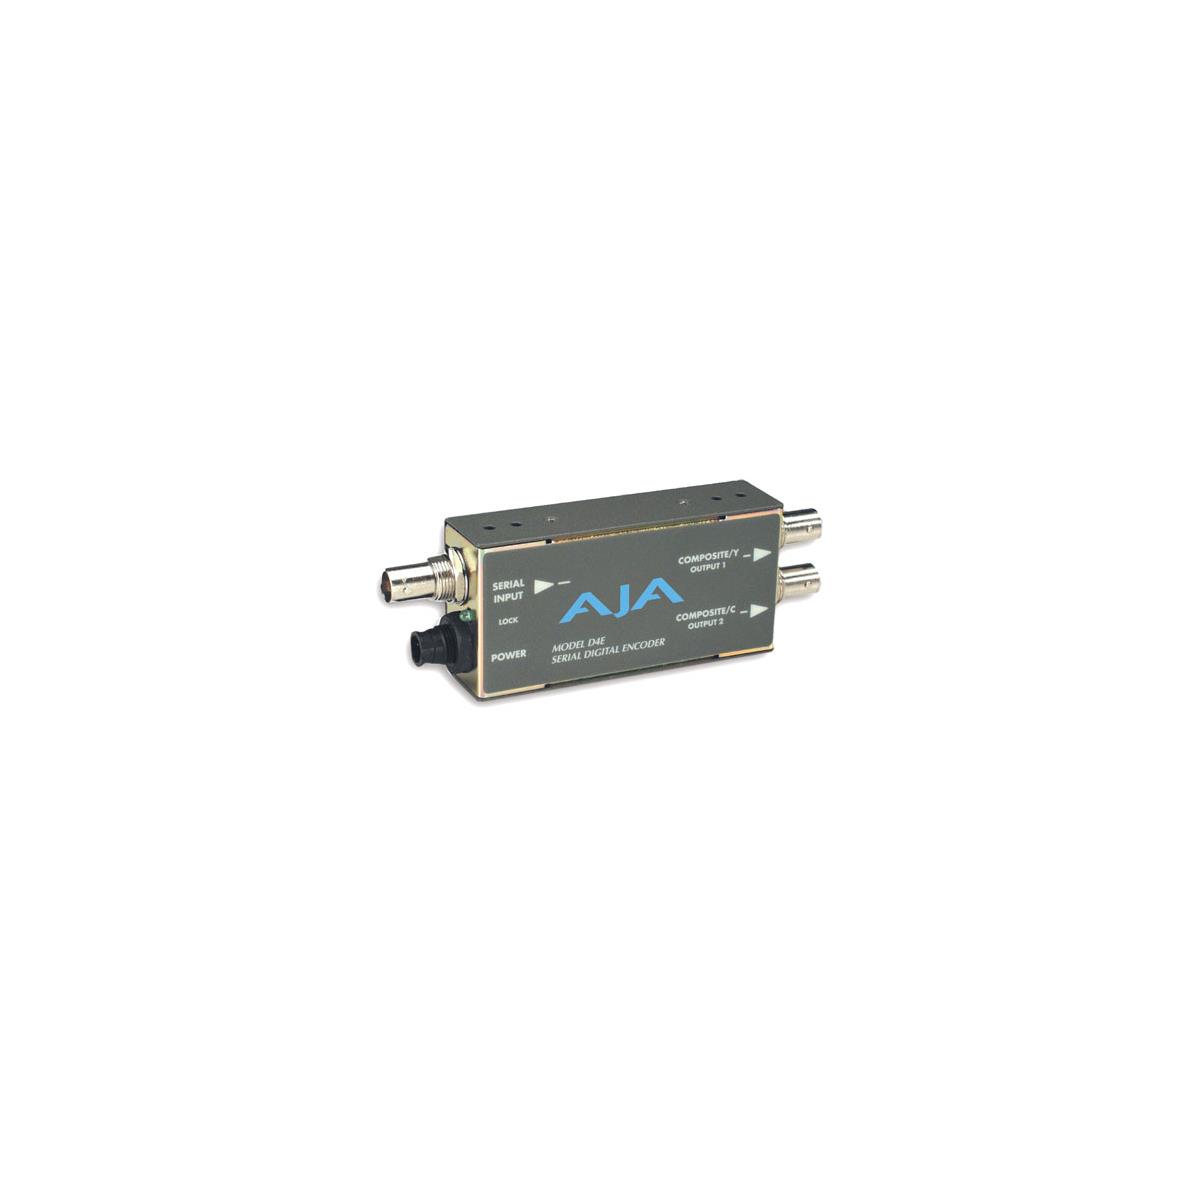 SDI to Composite or S-Video Transcoder - AJA D4E